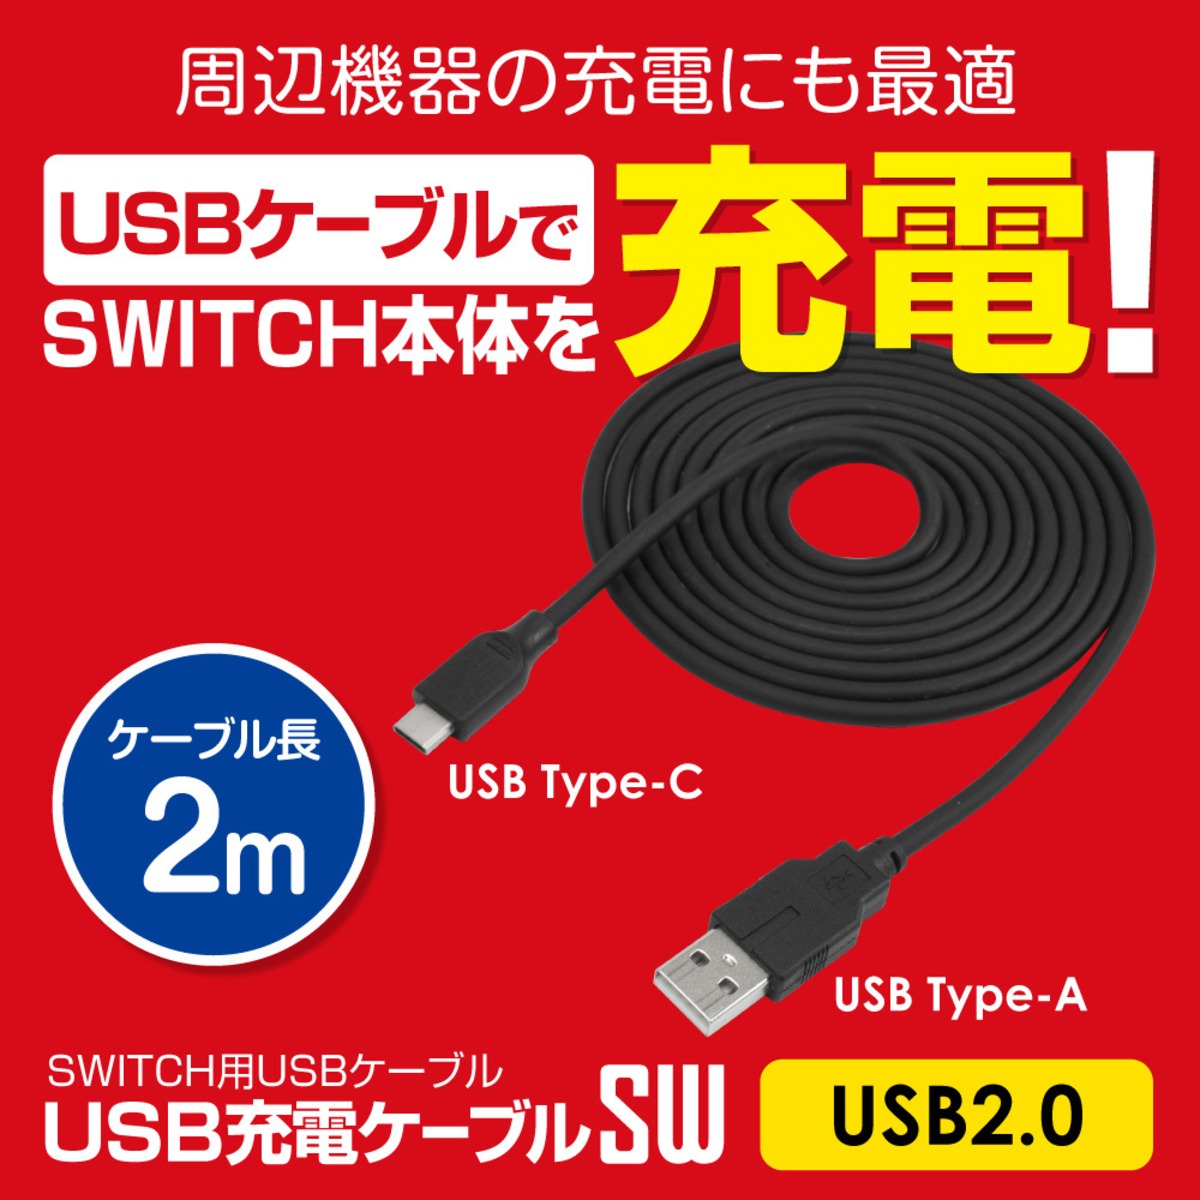 Switch Type C 充電ケーブル Usb2 0 Usbケーブルsw 2m メール便送料無料 ゲームテック公式ストア ゲームテックダイレクト